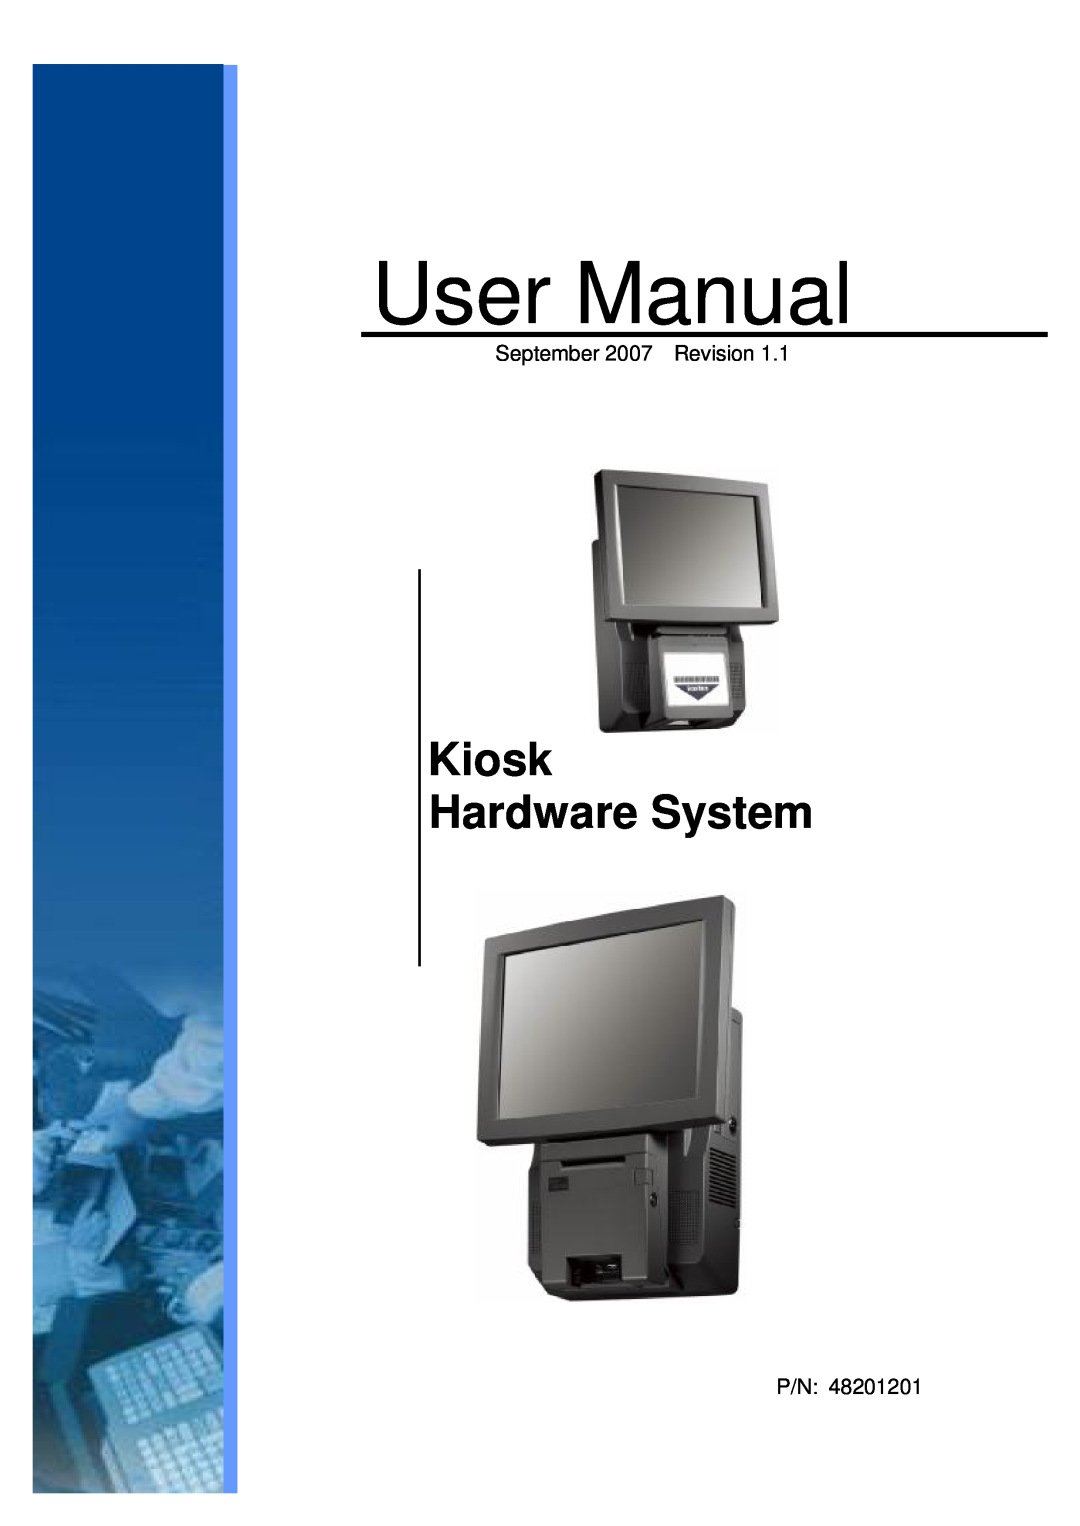 Intel 48201201 user manual User Manual, Kiosk Hardware System 